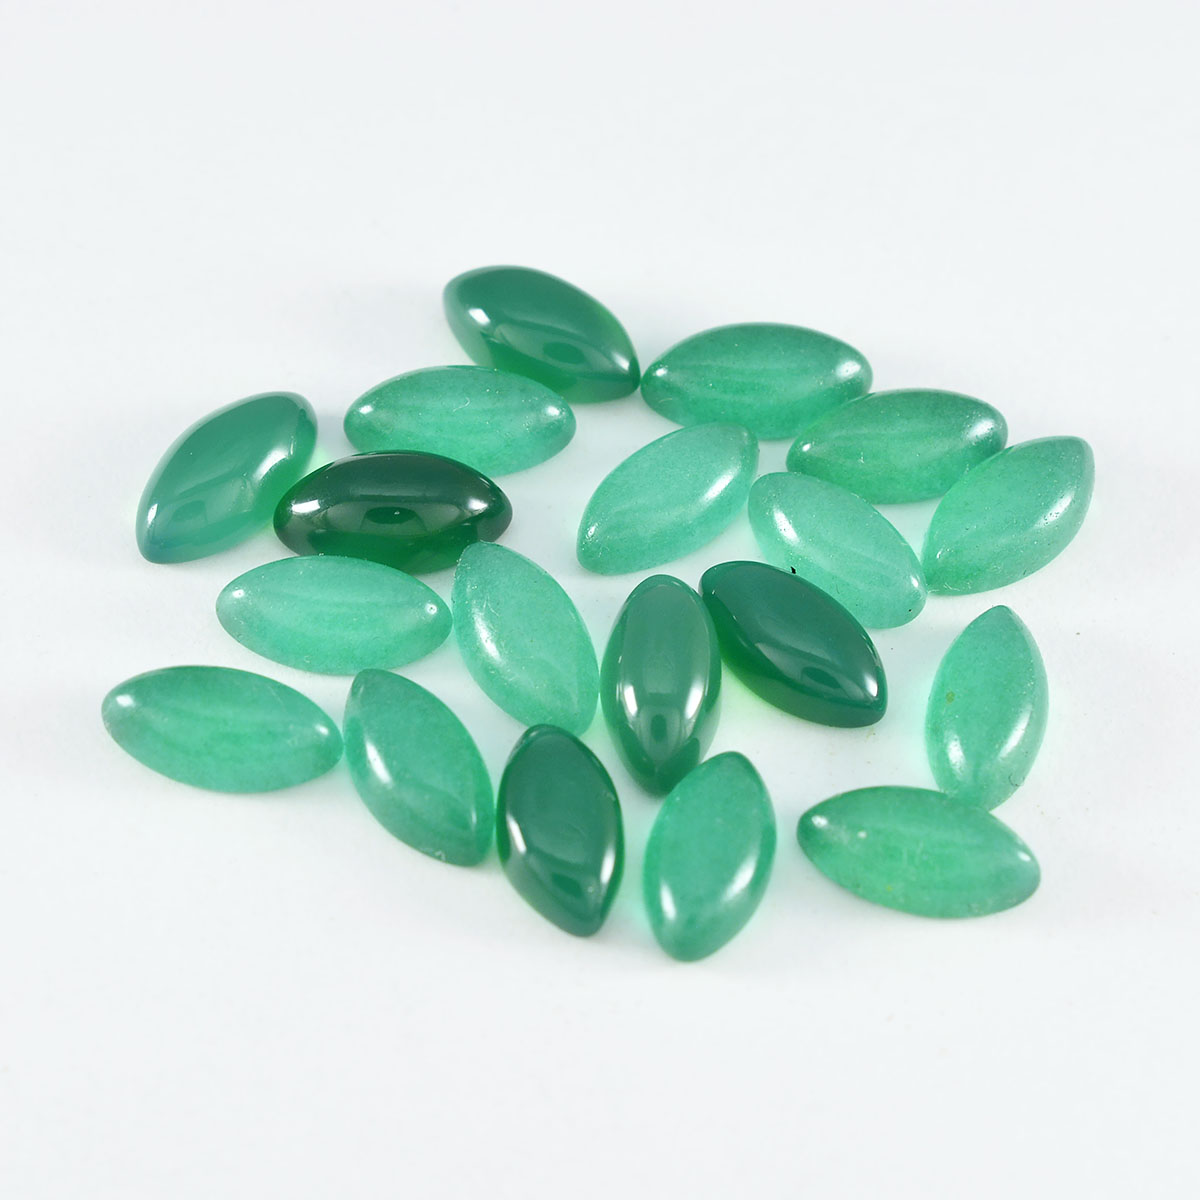 Riyogems 1PC Green Onyx Cabochon 5x10 mm Marquise Shape A Quality Stone